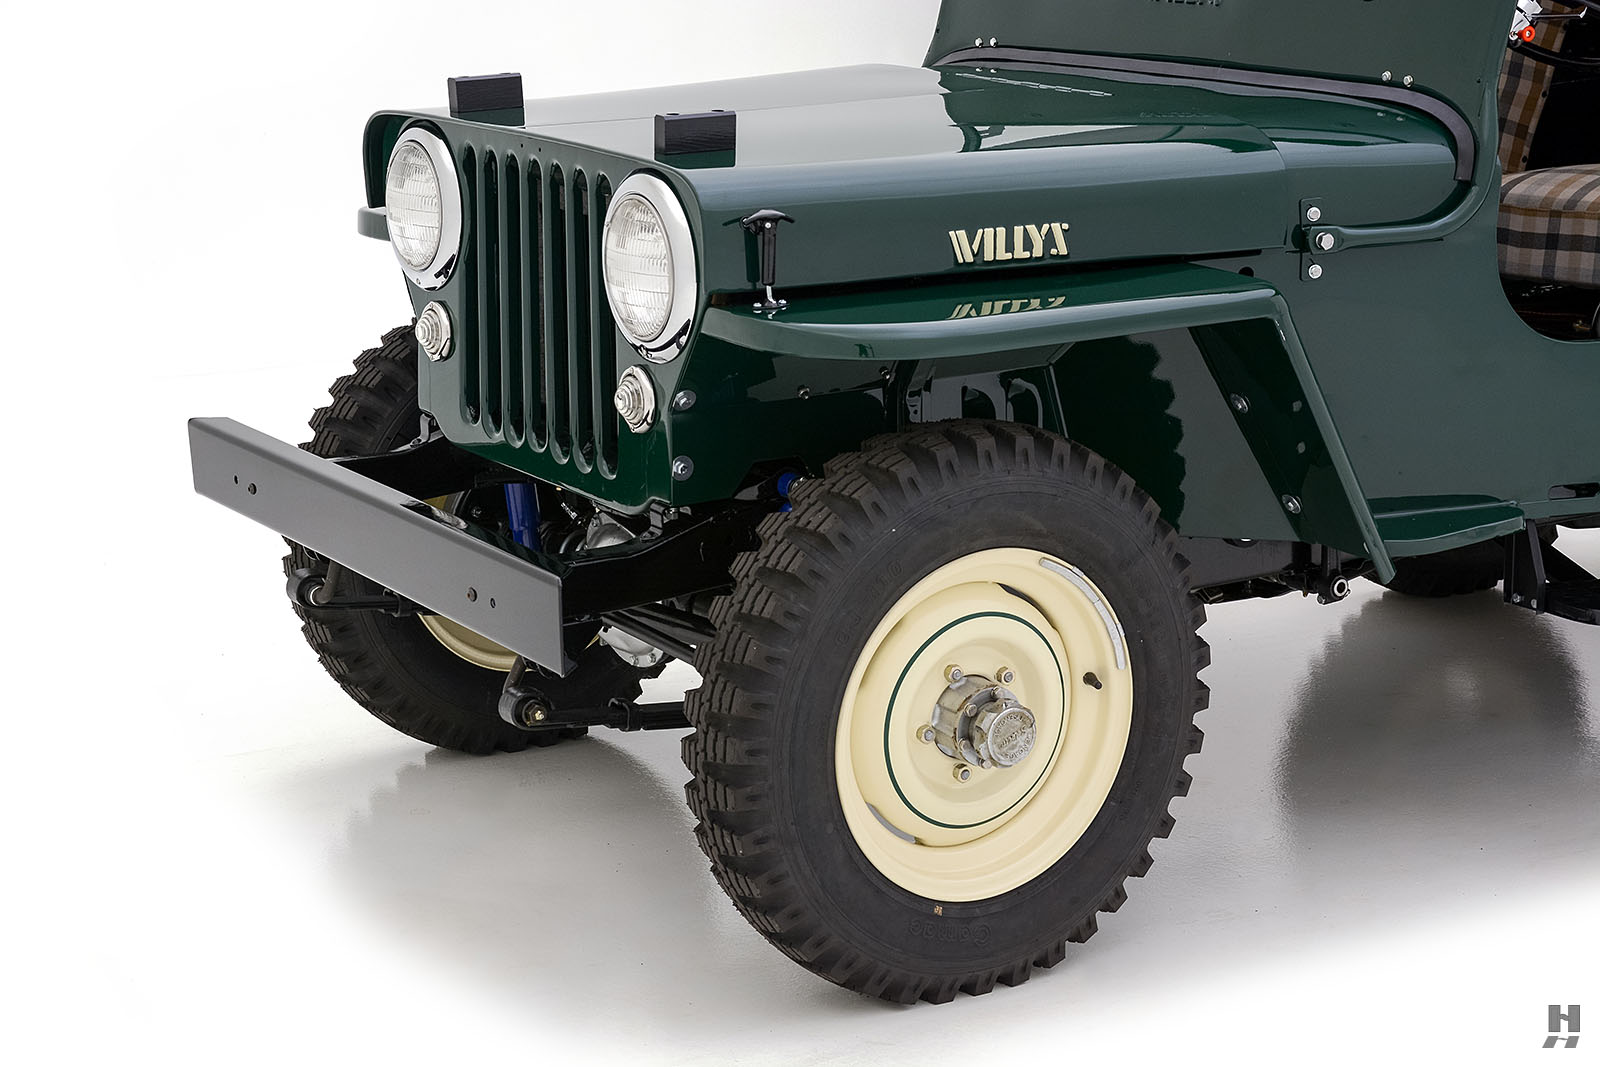 1958 willys-jeep cj-3b 1/4 ton